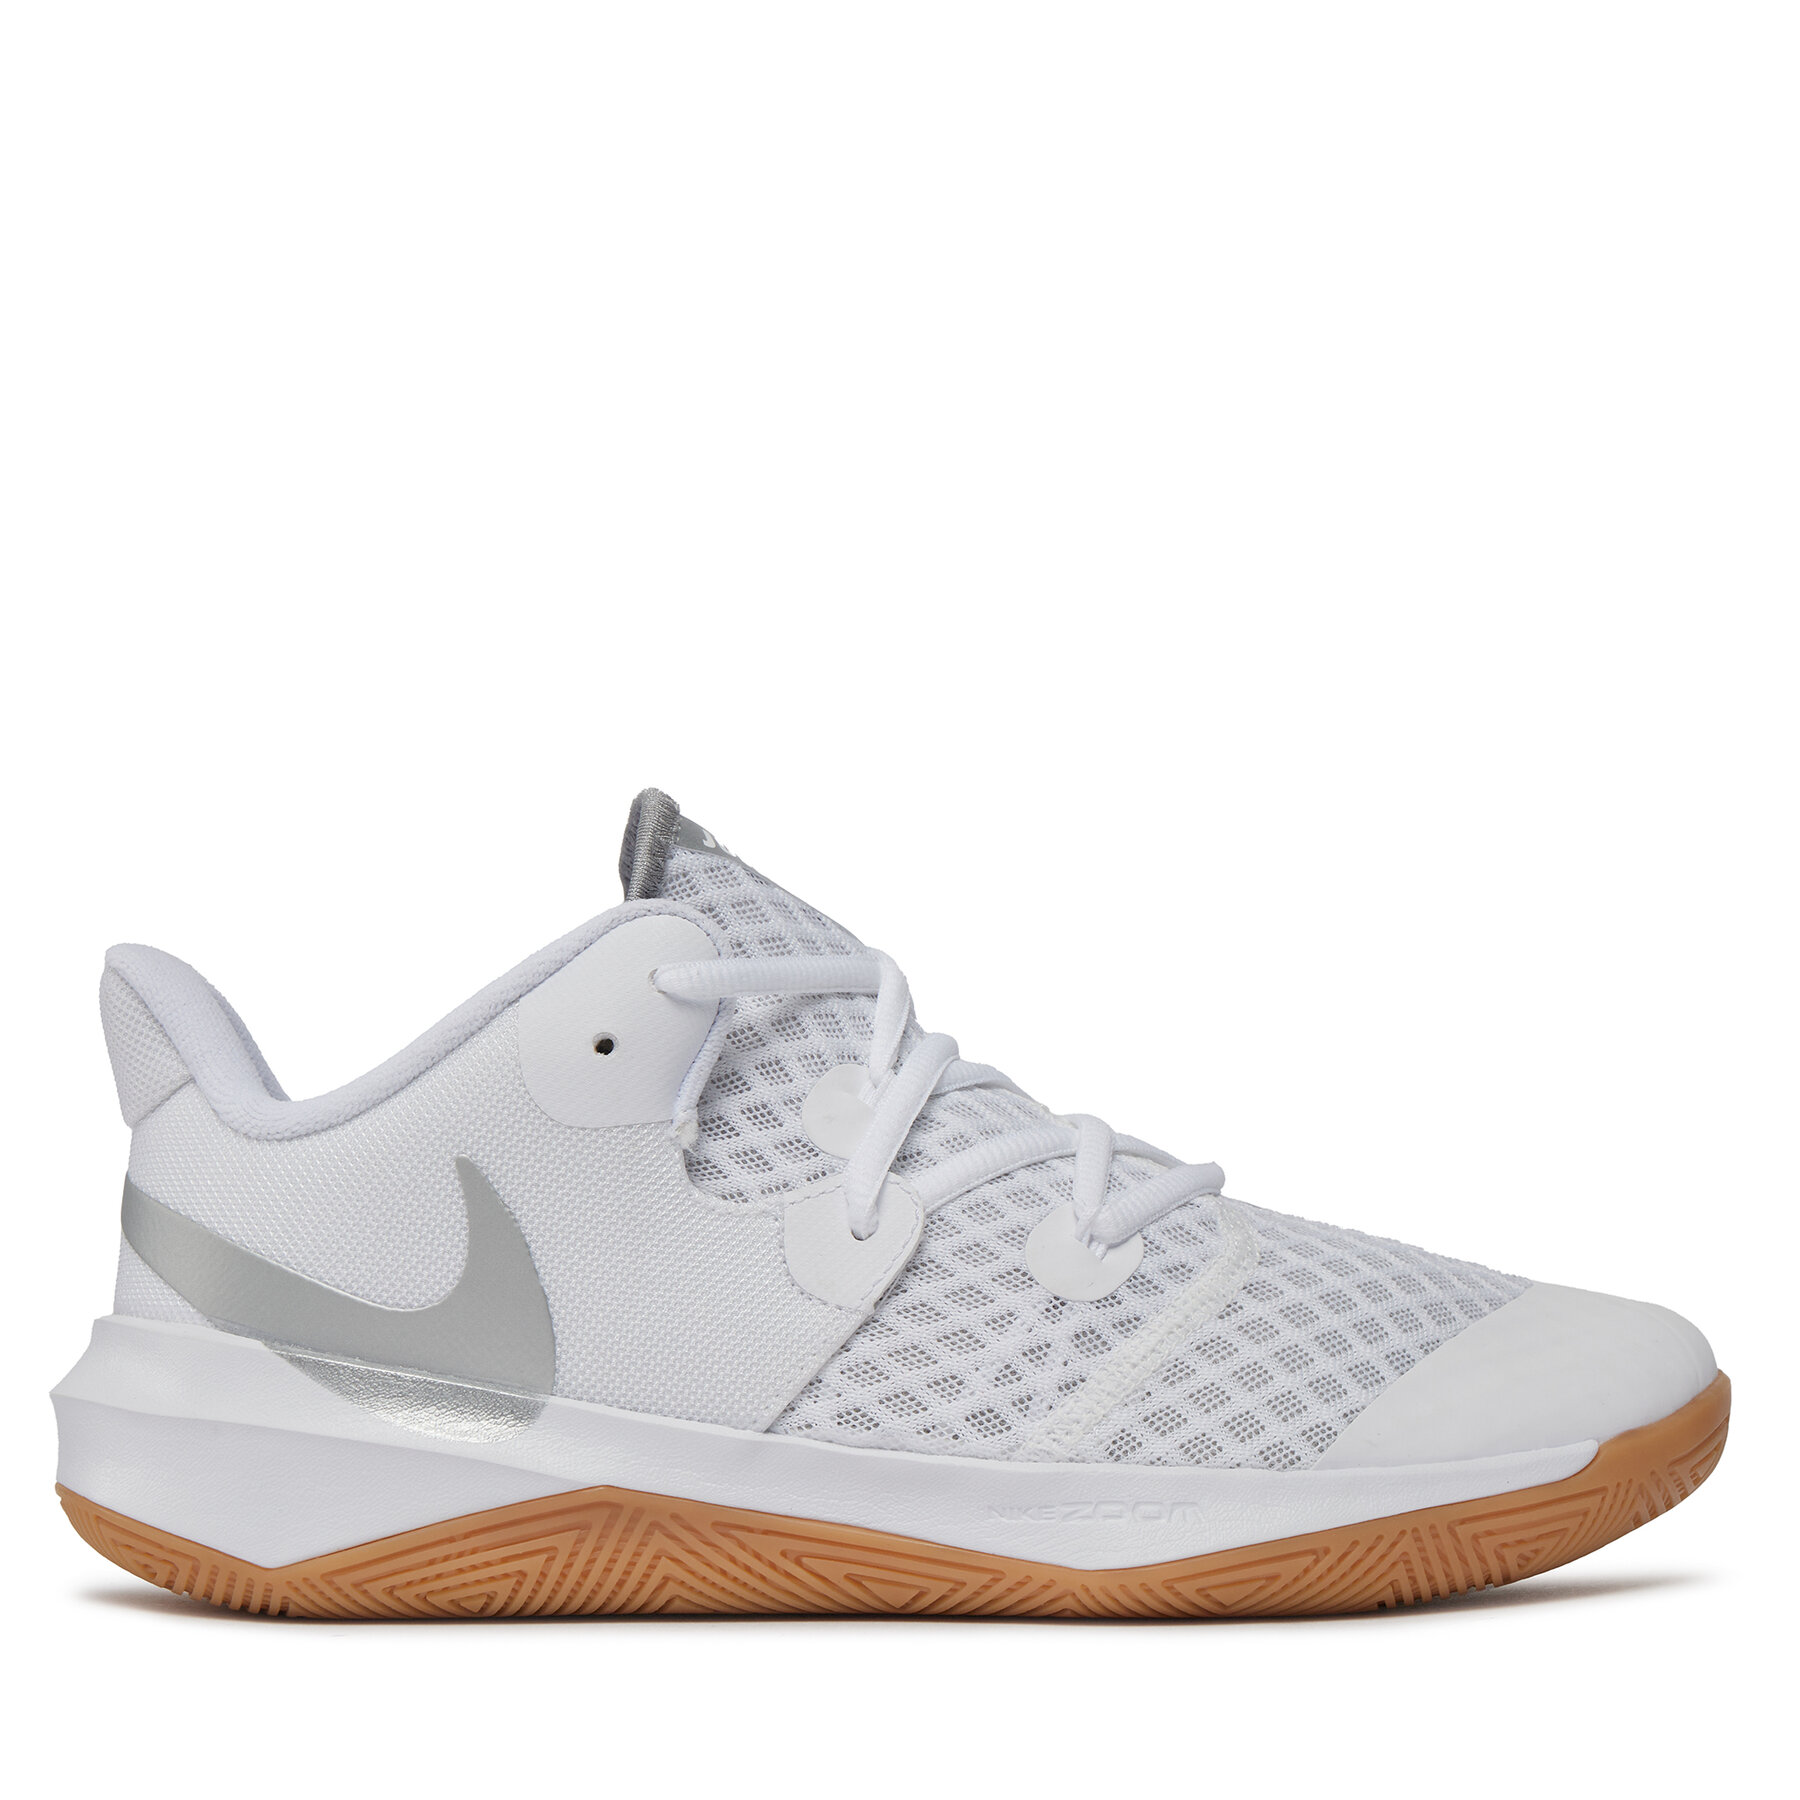 Schuhe Nike Zoom Hyperspeed Court Se DJ4476 100 White/Metallic Silver von Nike